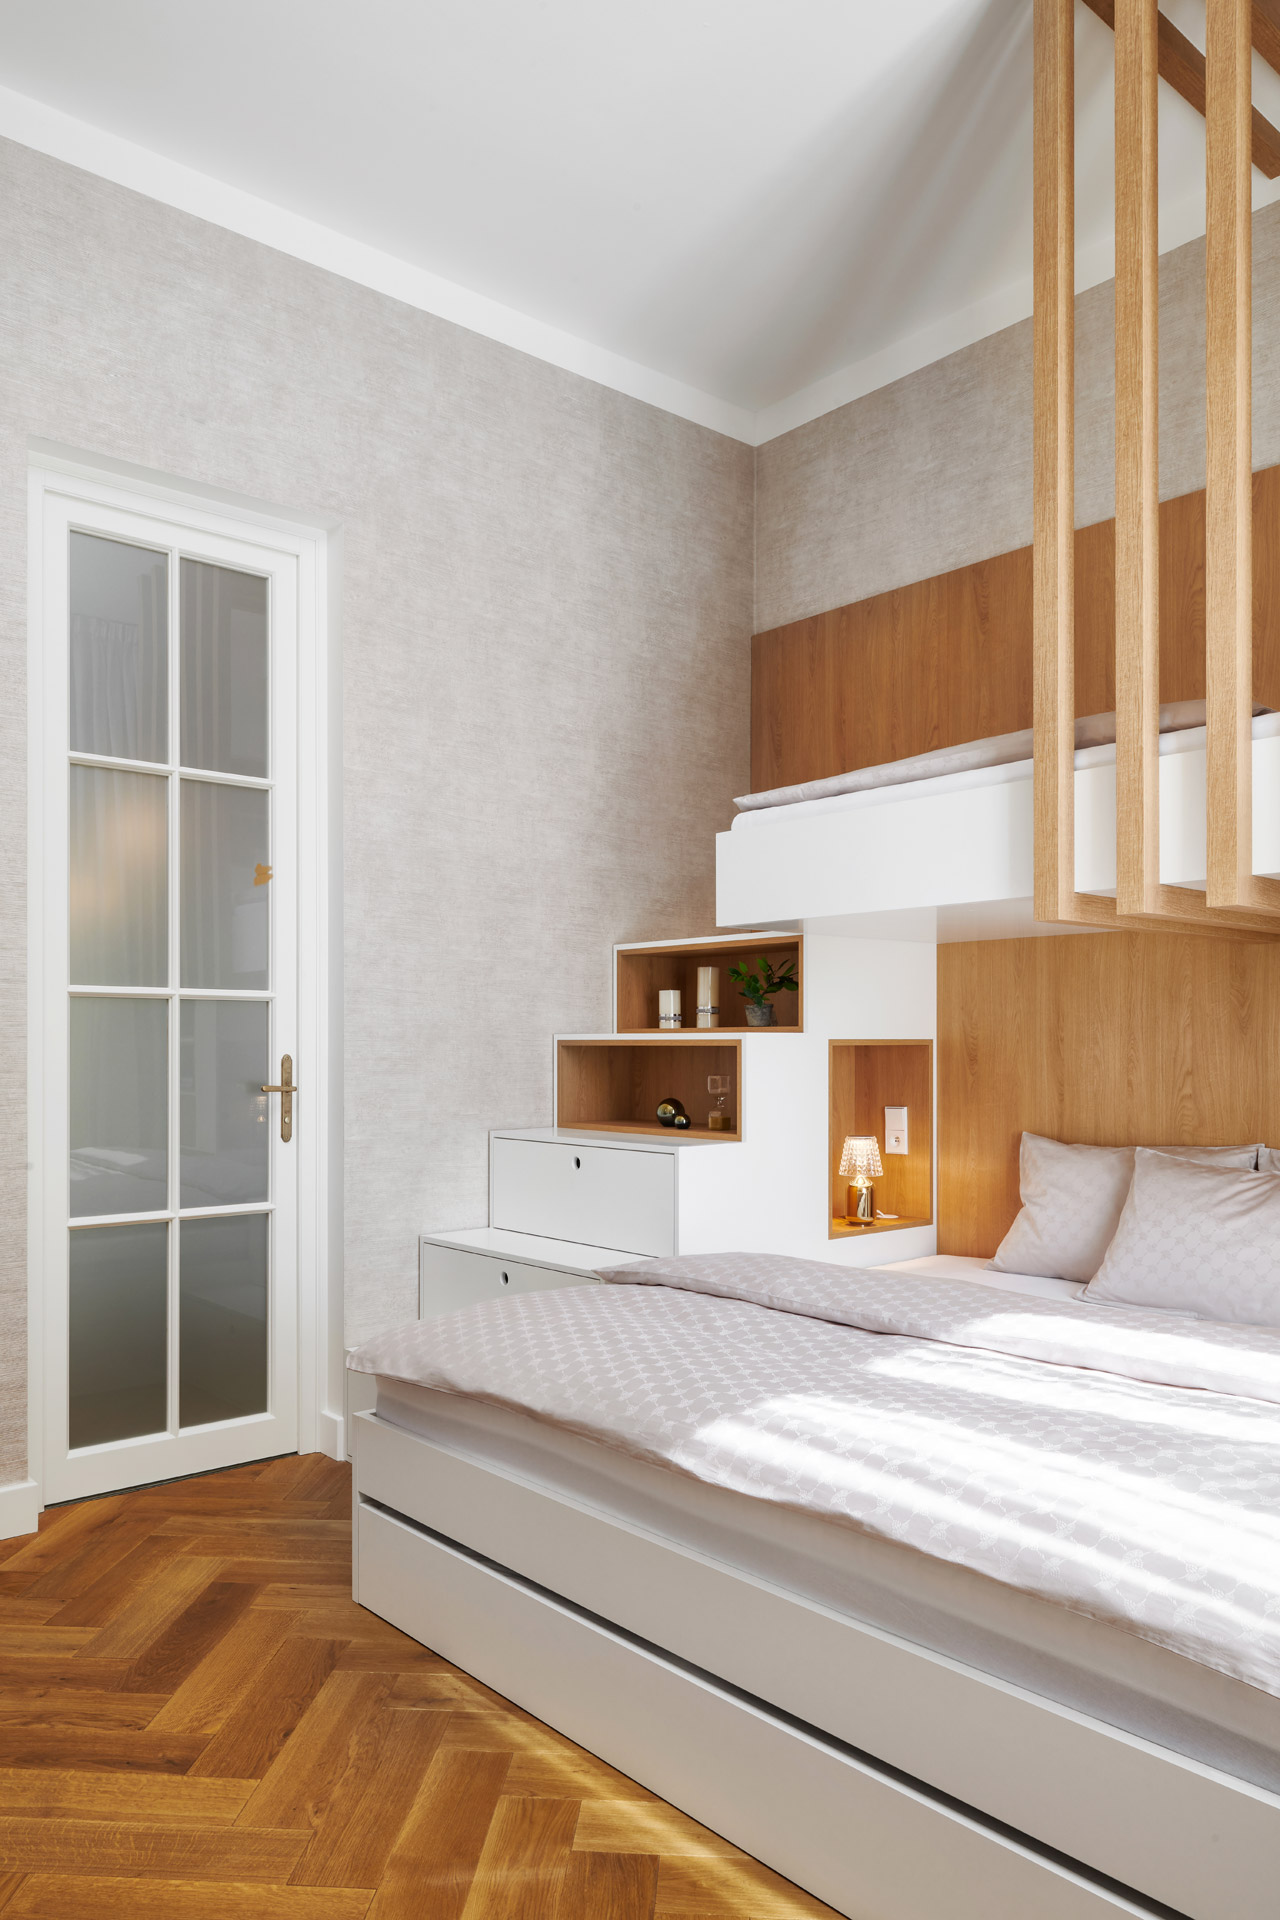 Hanák furniture, dream living, bedroom, sleep